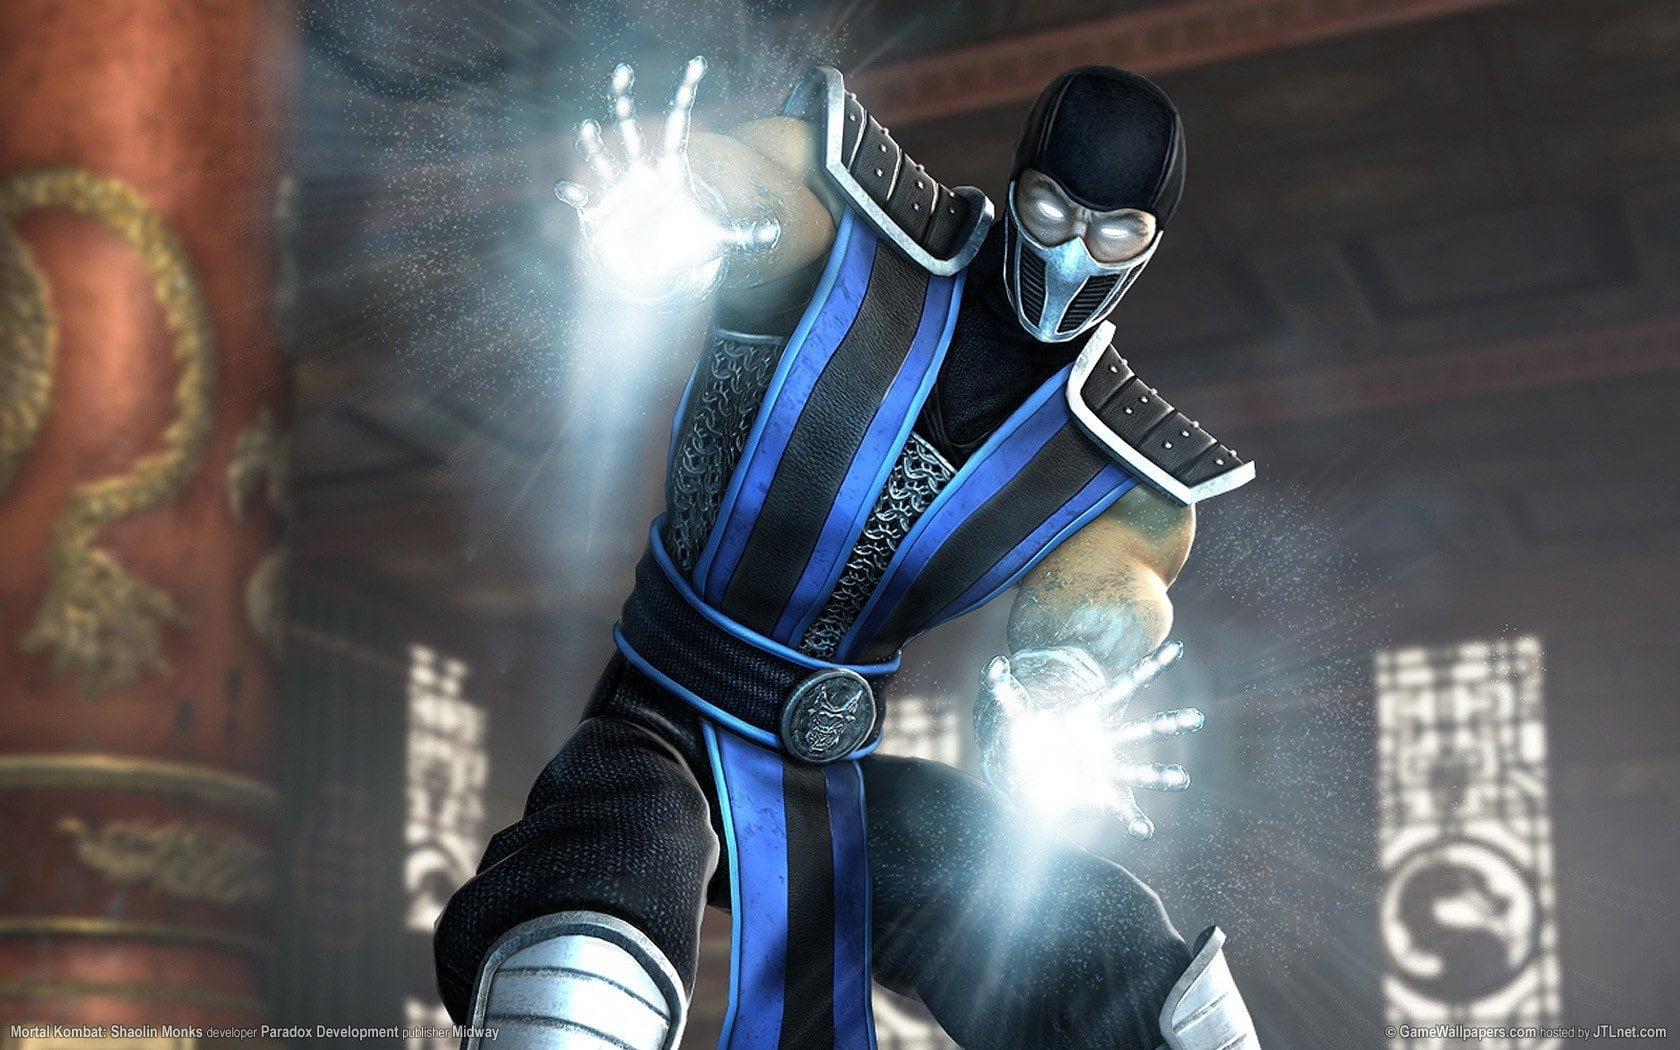 Mortal Kombat, Sub-Zero (Mortal Kombat), one person, human body part